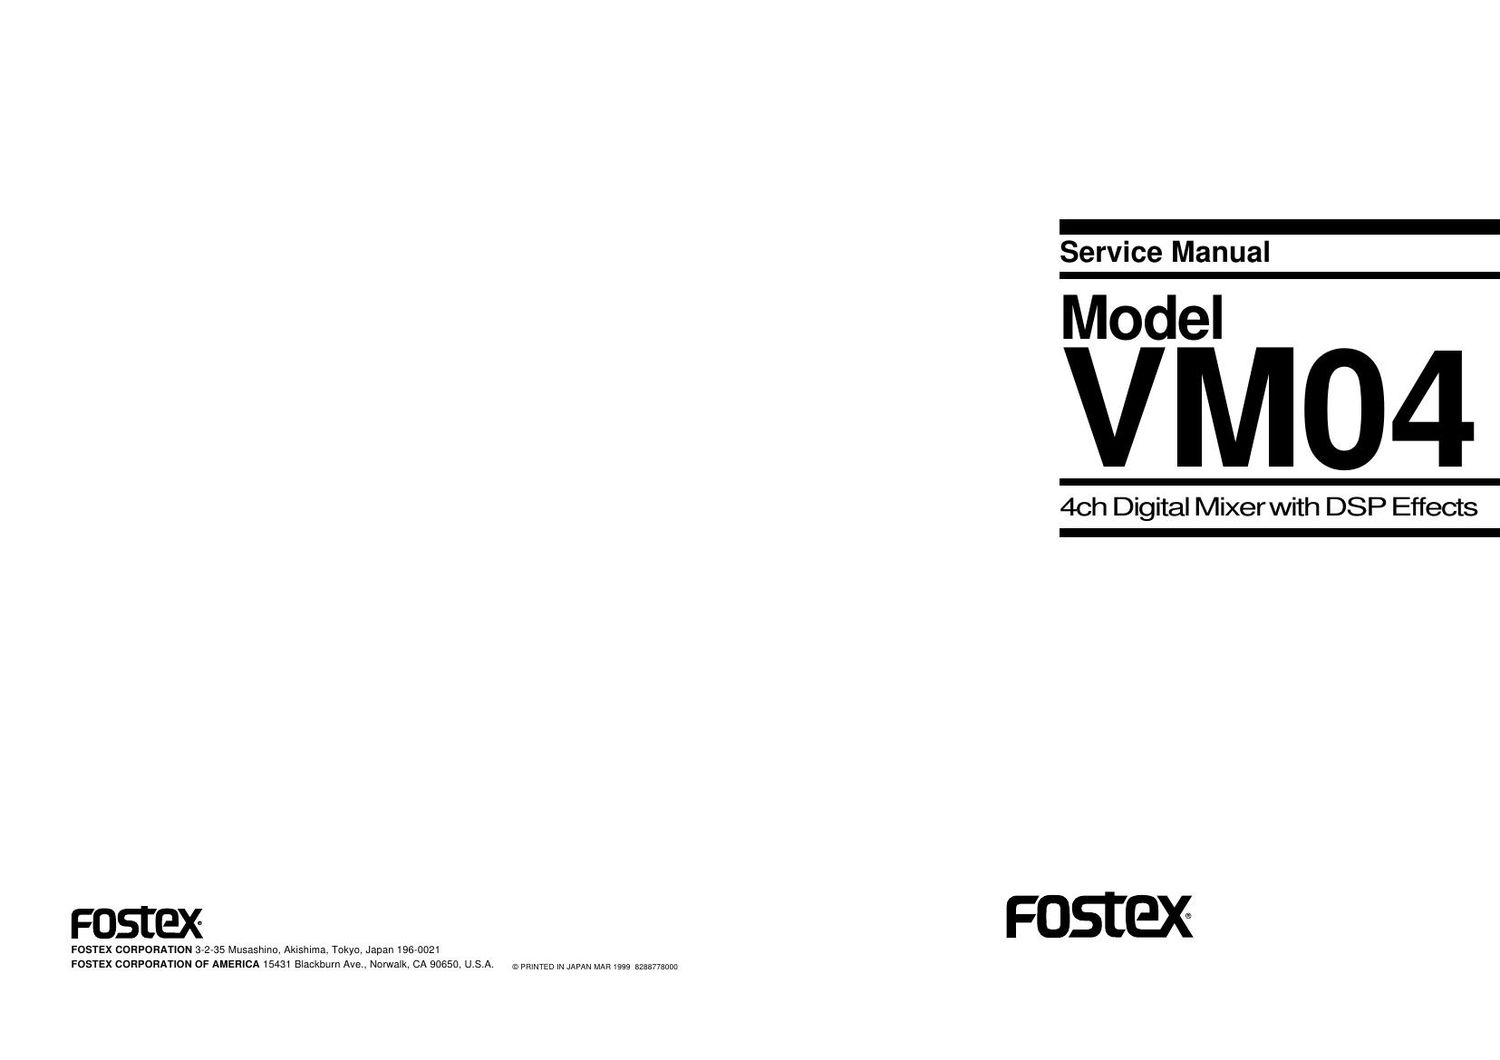 fostex vm04 4ch digital mixer service manual